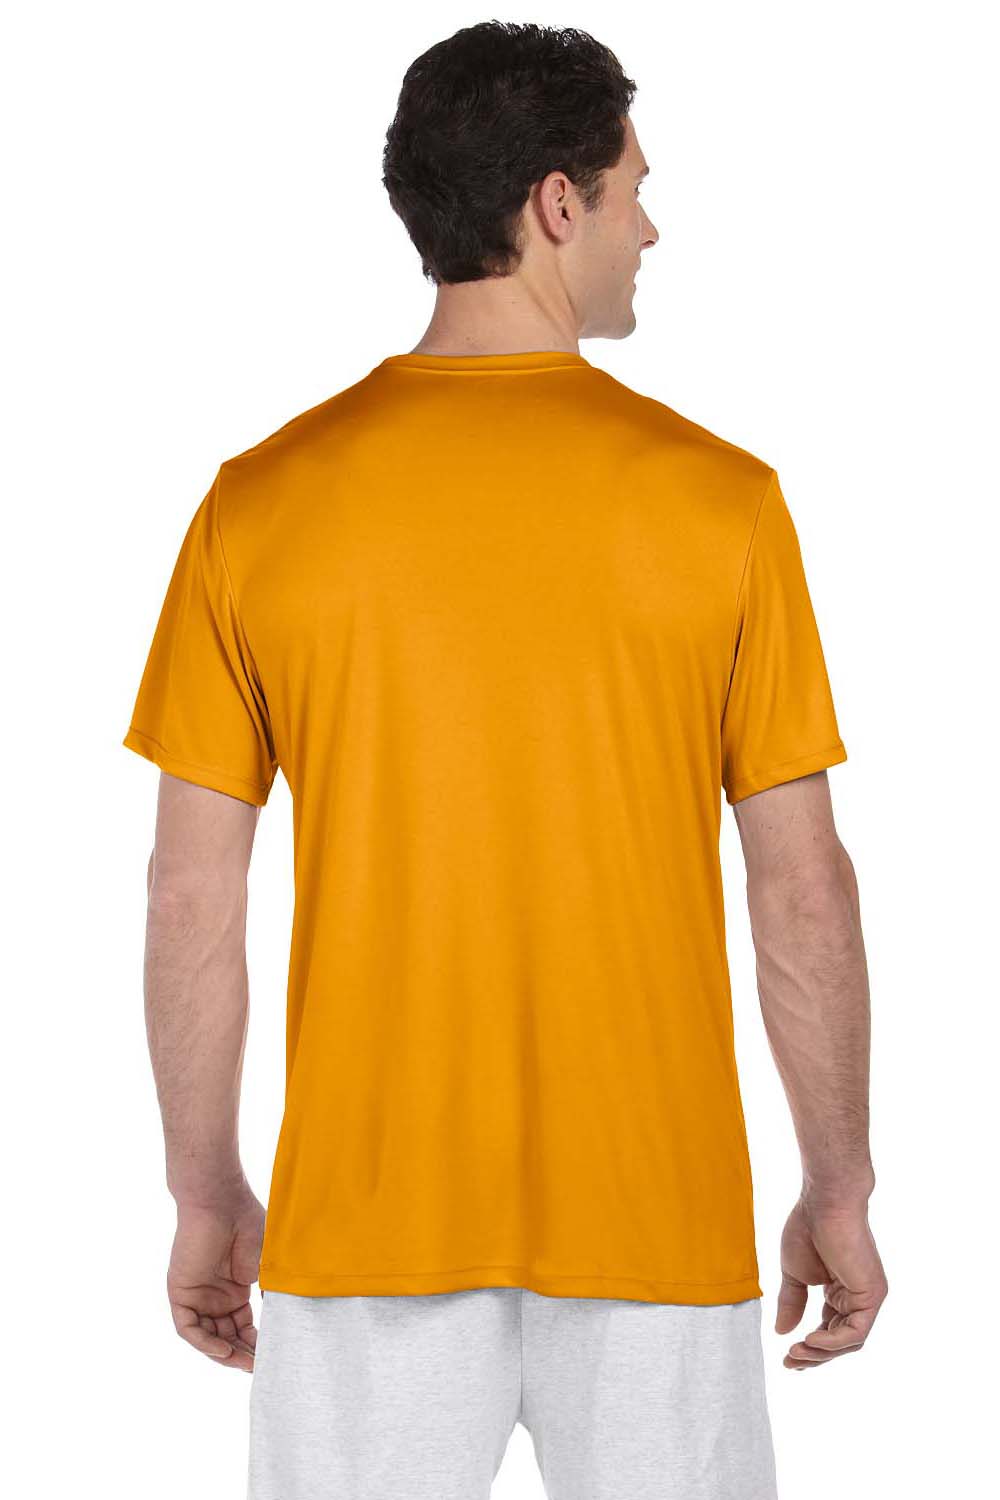 Hanes 4820 Mens Cool DRI FreshIQ Moisture Wicking Short Sleeve Crewneck T-Shirt Safety Orange Back